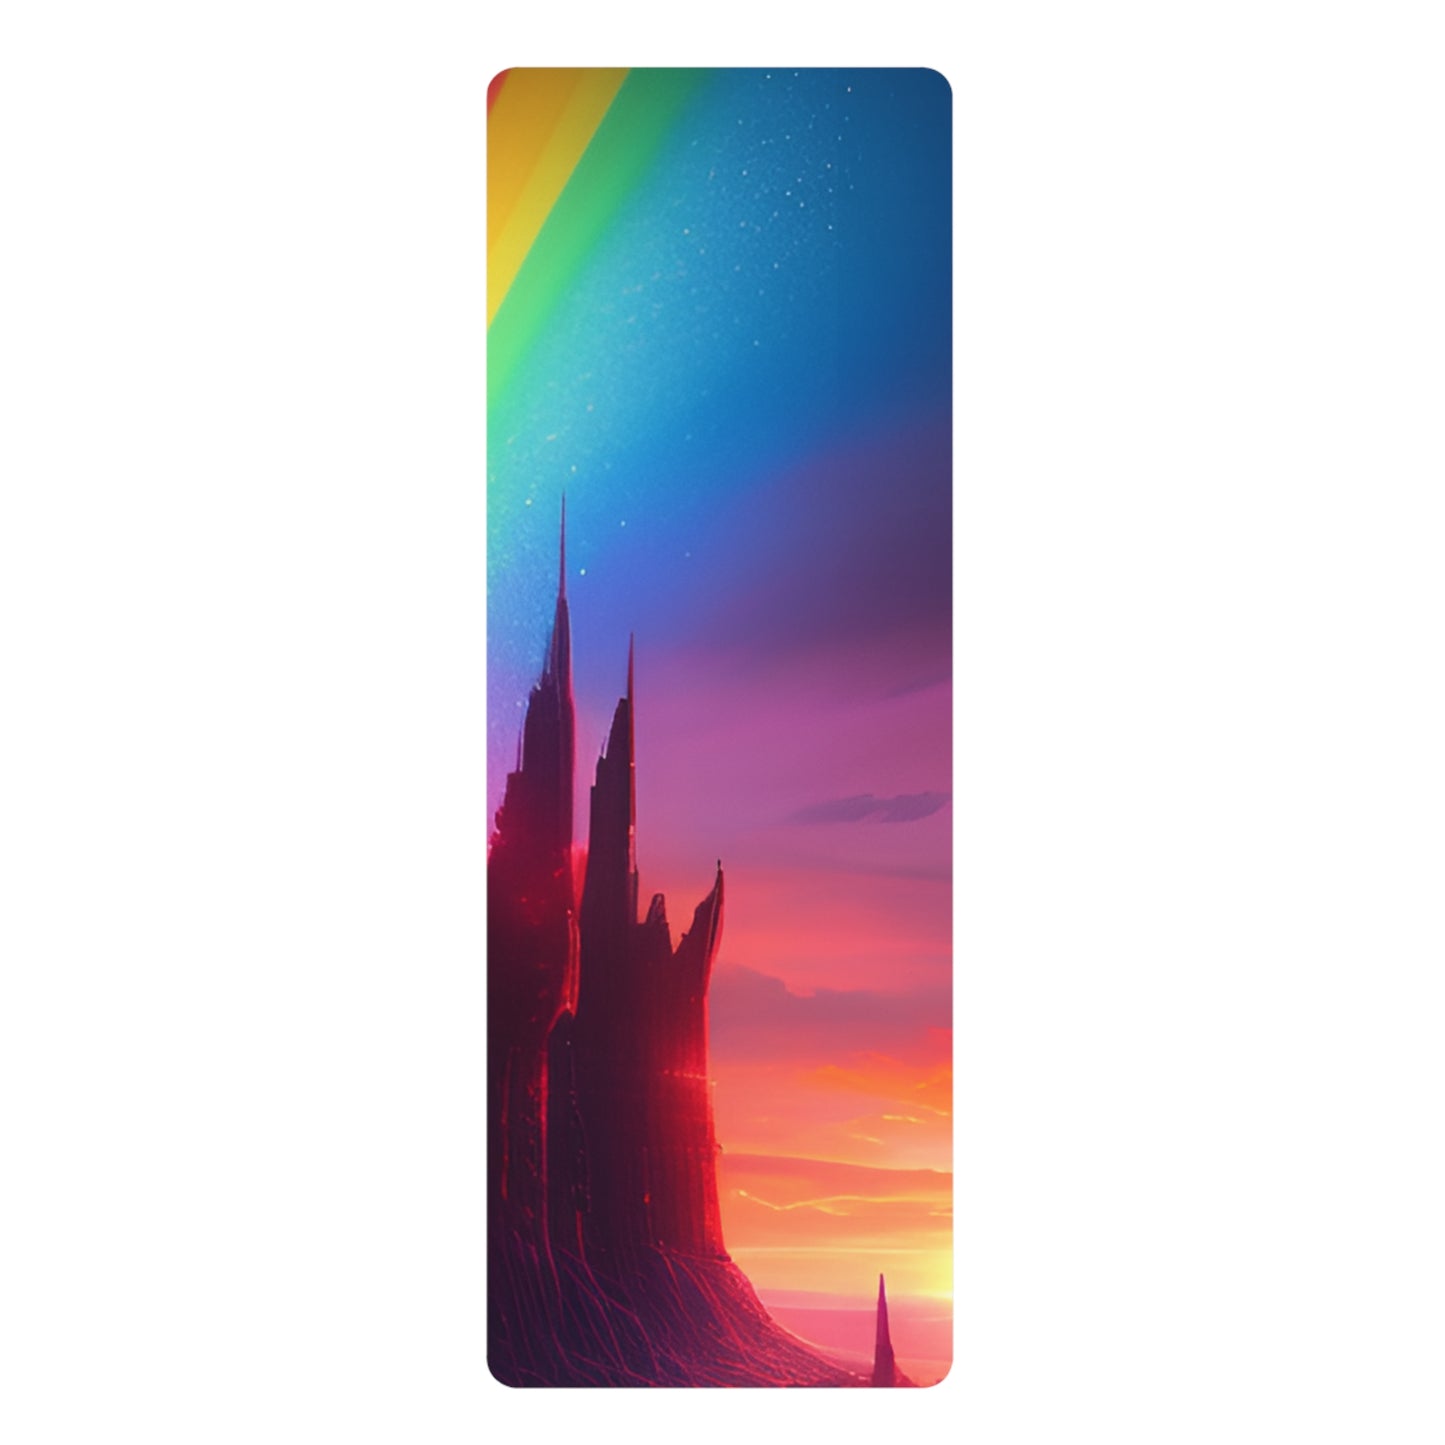 Horizon Rainbow Rubber Yoga Mat